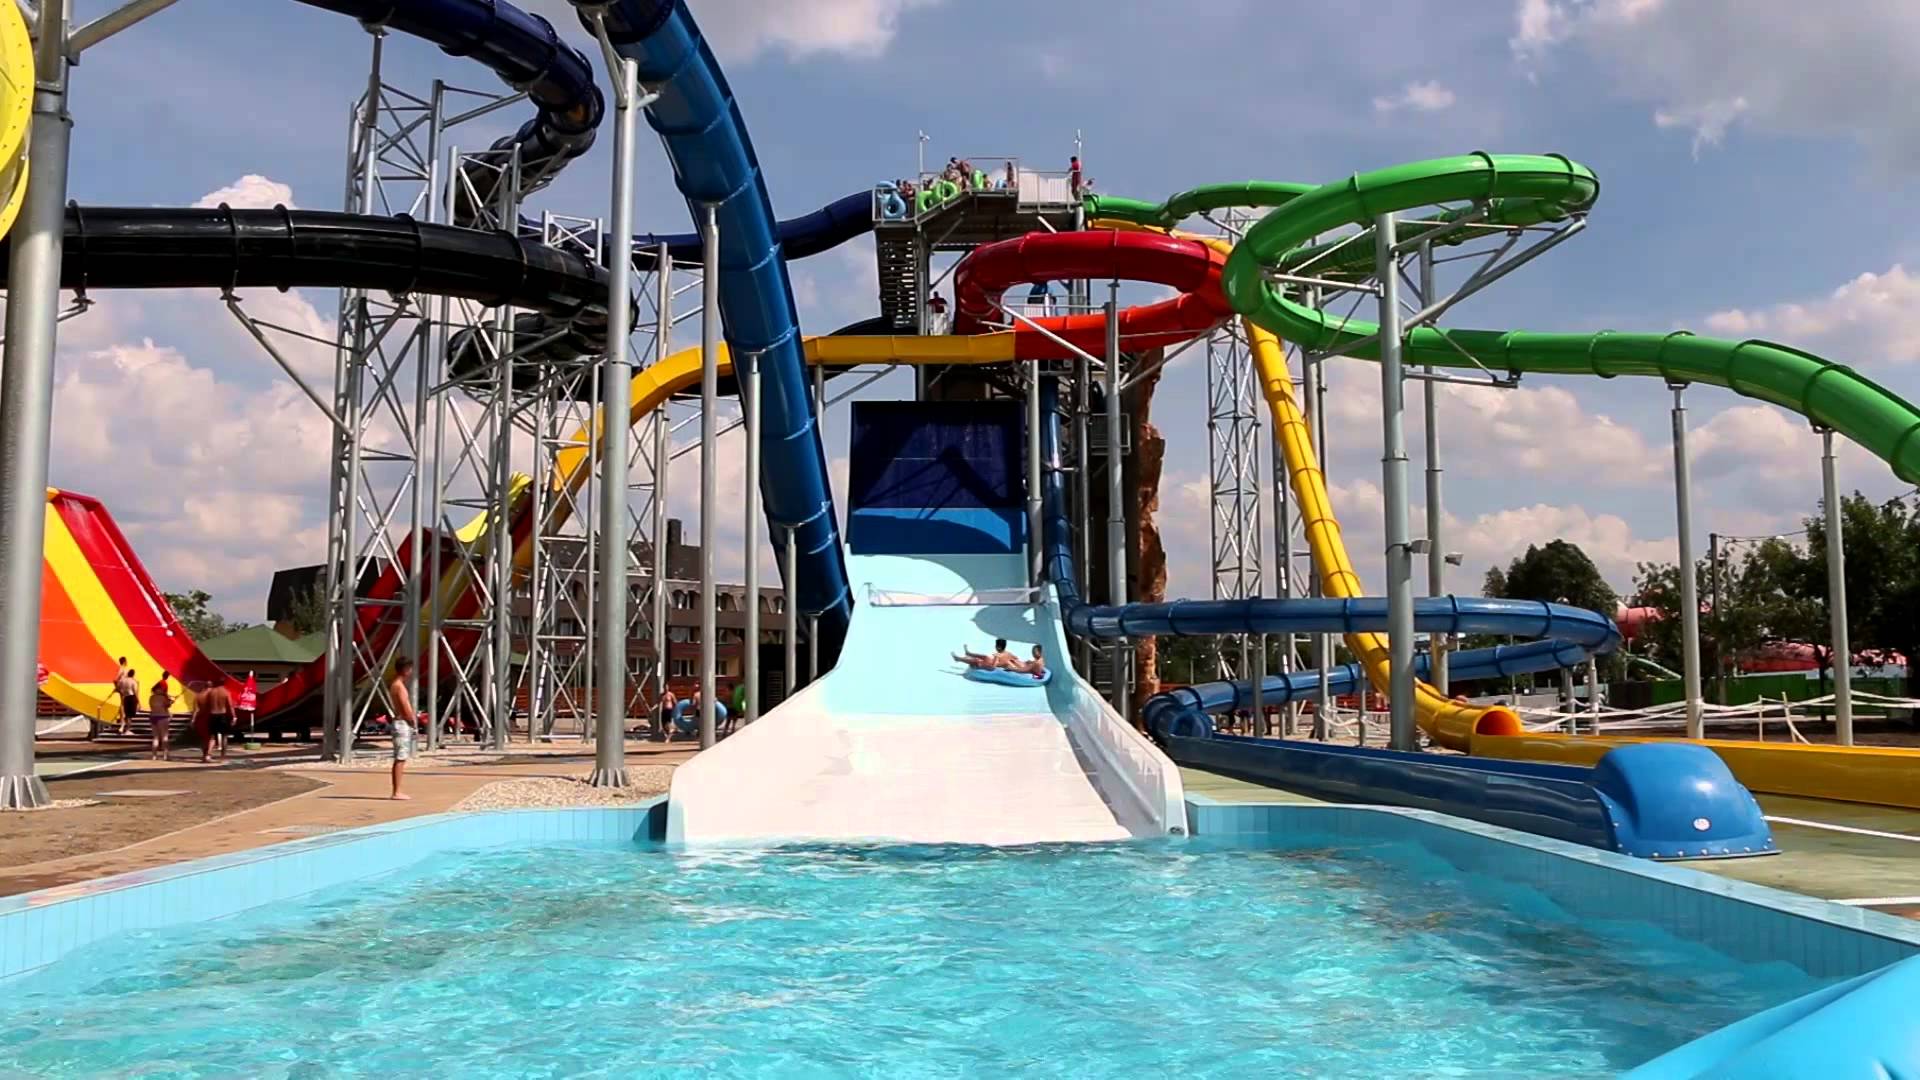 Adrenalin experience at Aqua Park!